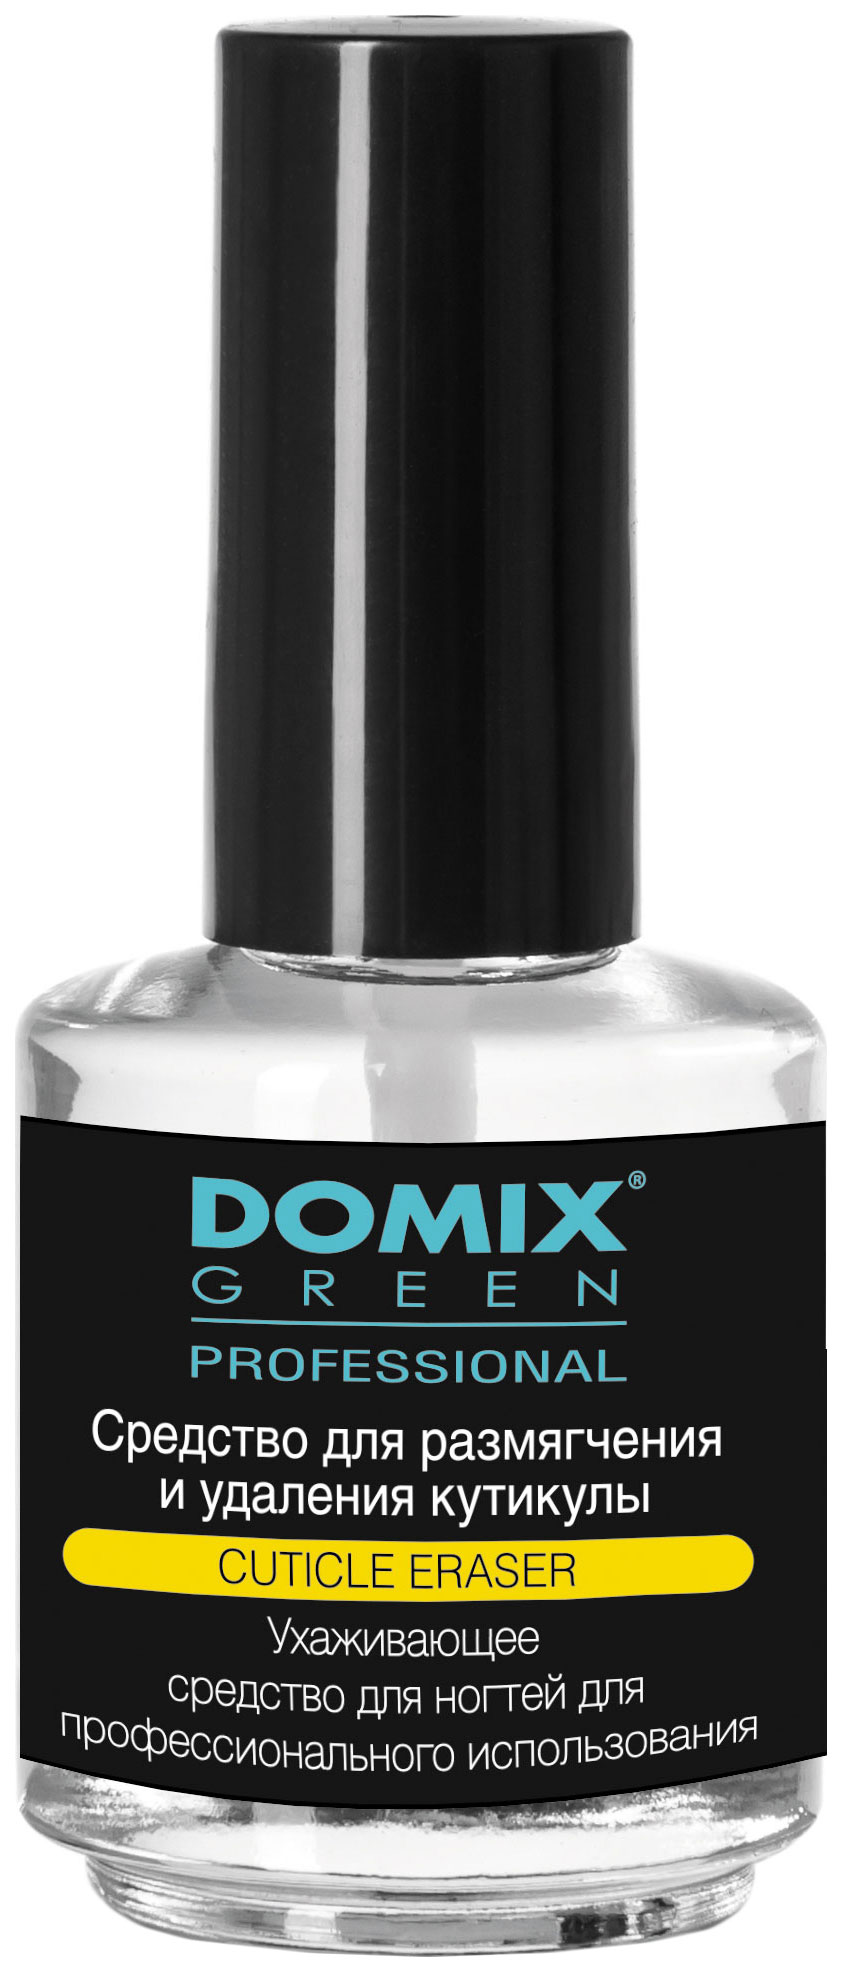 Средство для удаления кутикулы Domix Green Professional Cuticle Eraser 17 мл domix миска для краски желтая domix green professional